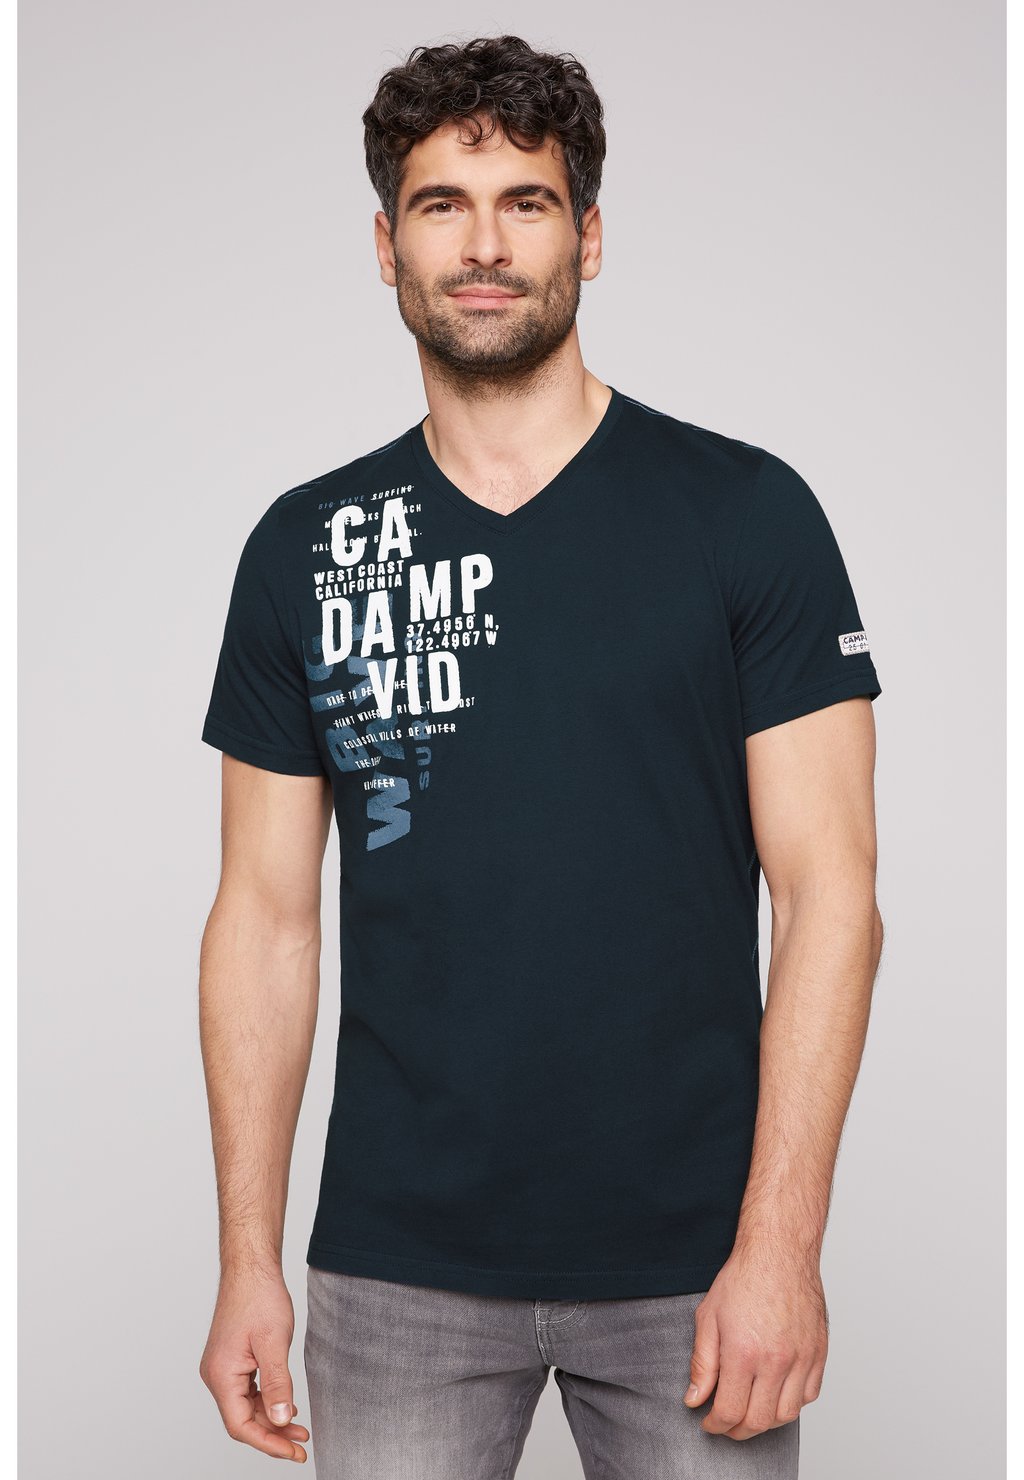 футболка базовая v neck mit lammgarnstruktur camp david цвет sea green Футболка с принтом MIT V-NECK UND LABEL Camp David, цвет blue navy